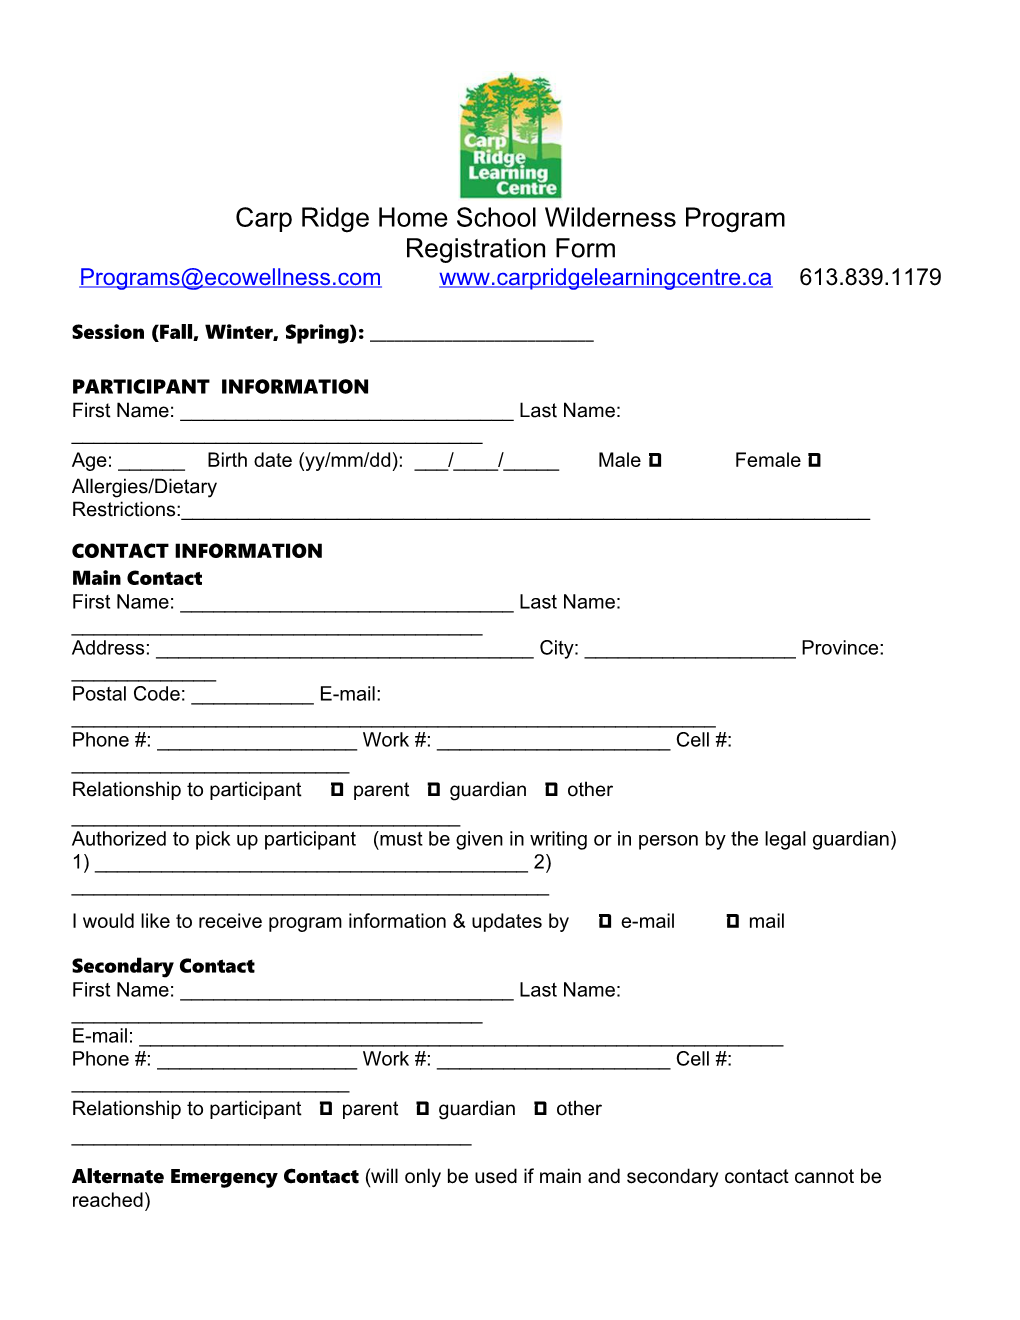 Earthlore Wilderness Camps Registration Form